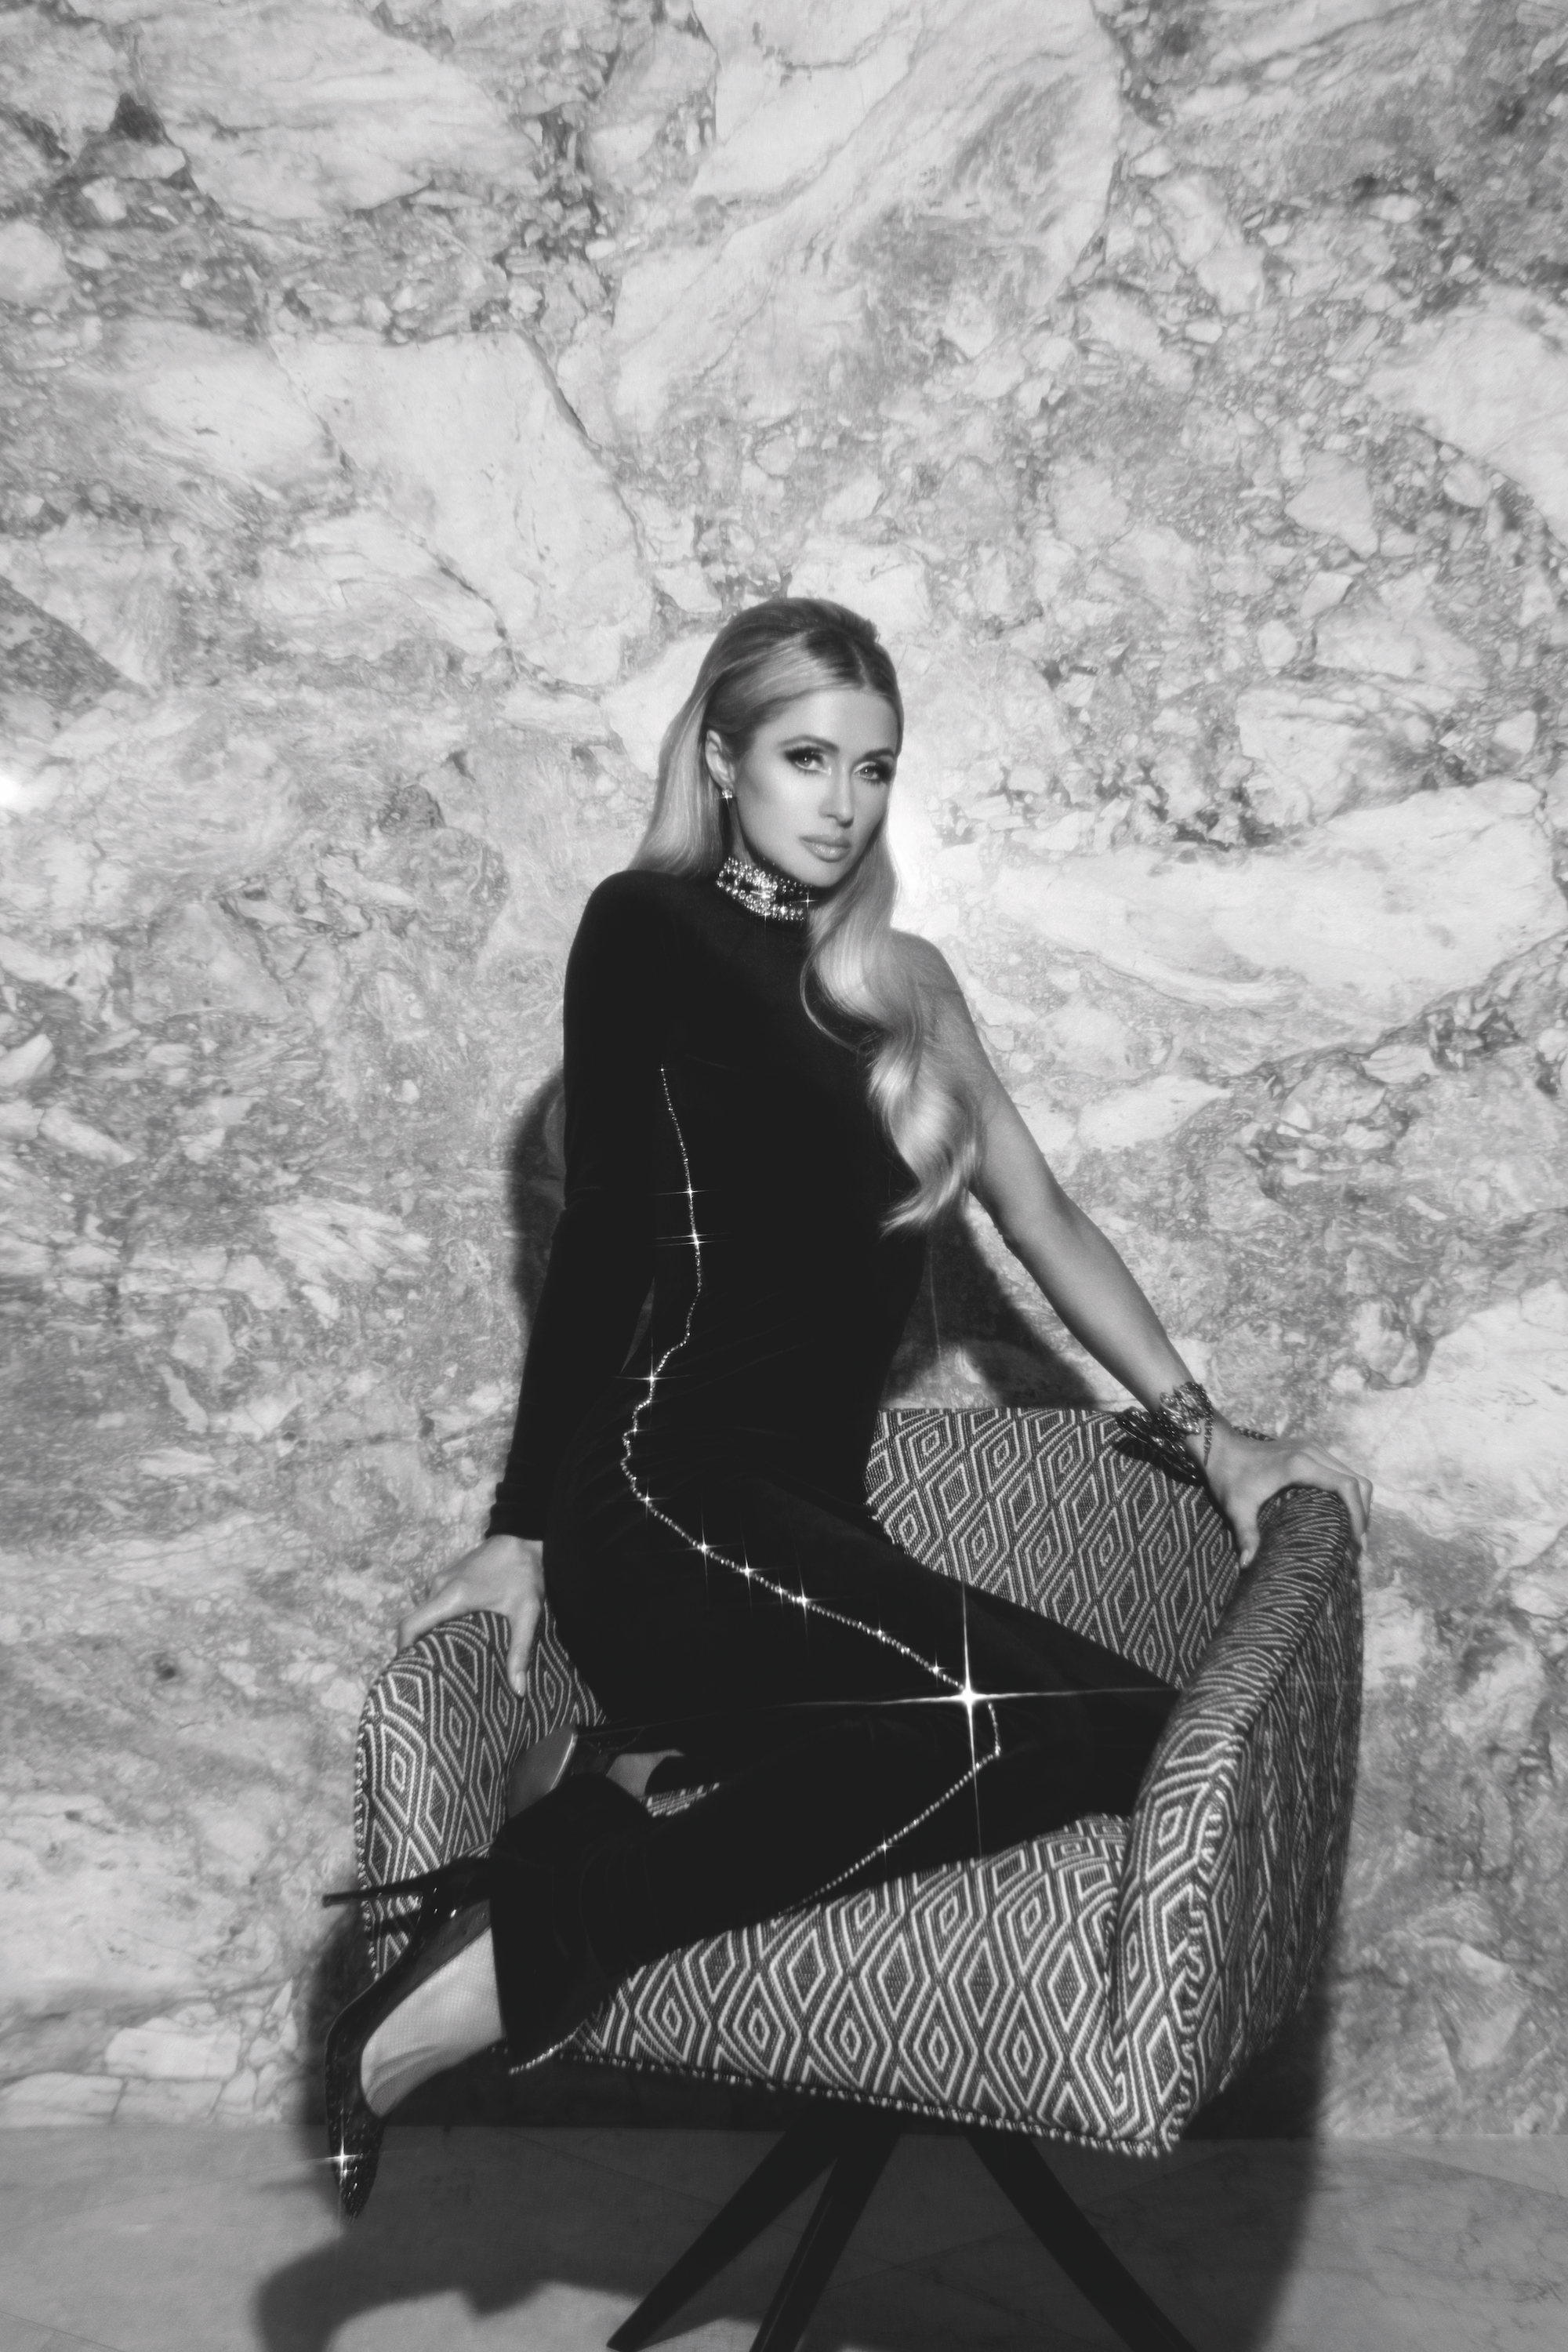 Paris Hilton Reozing Sex Appeal en New Shoot! - Photo 5